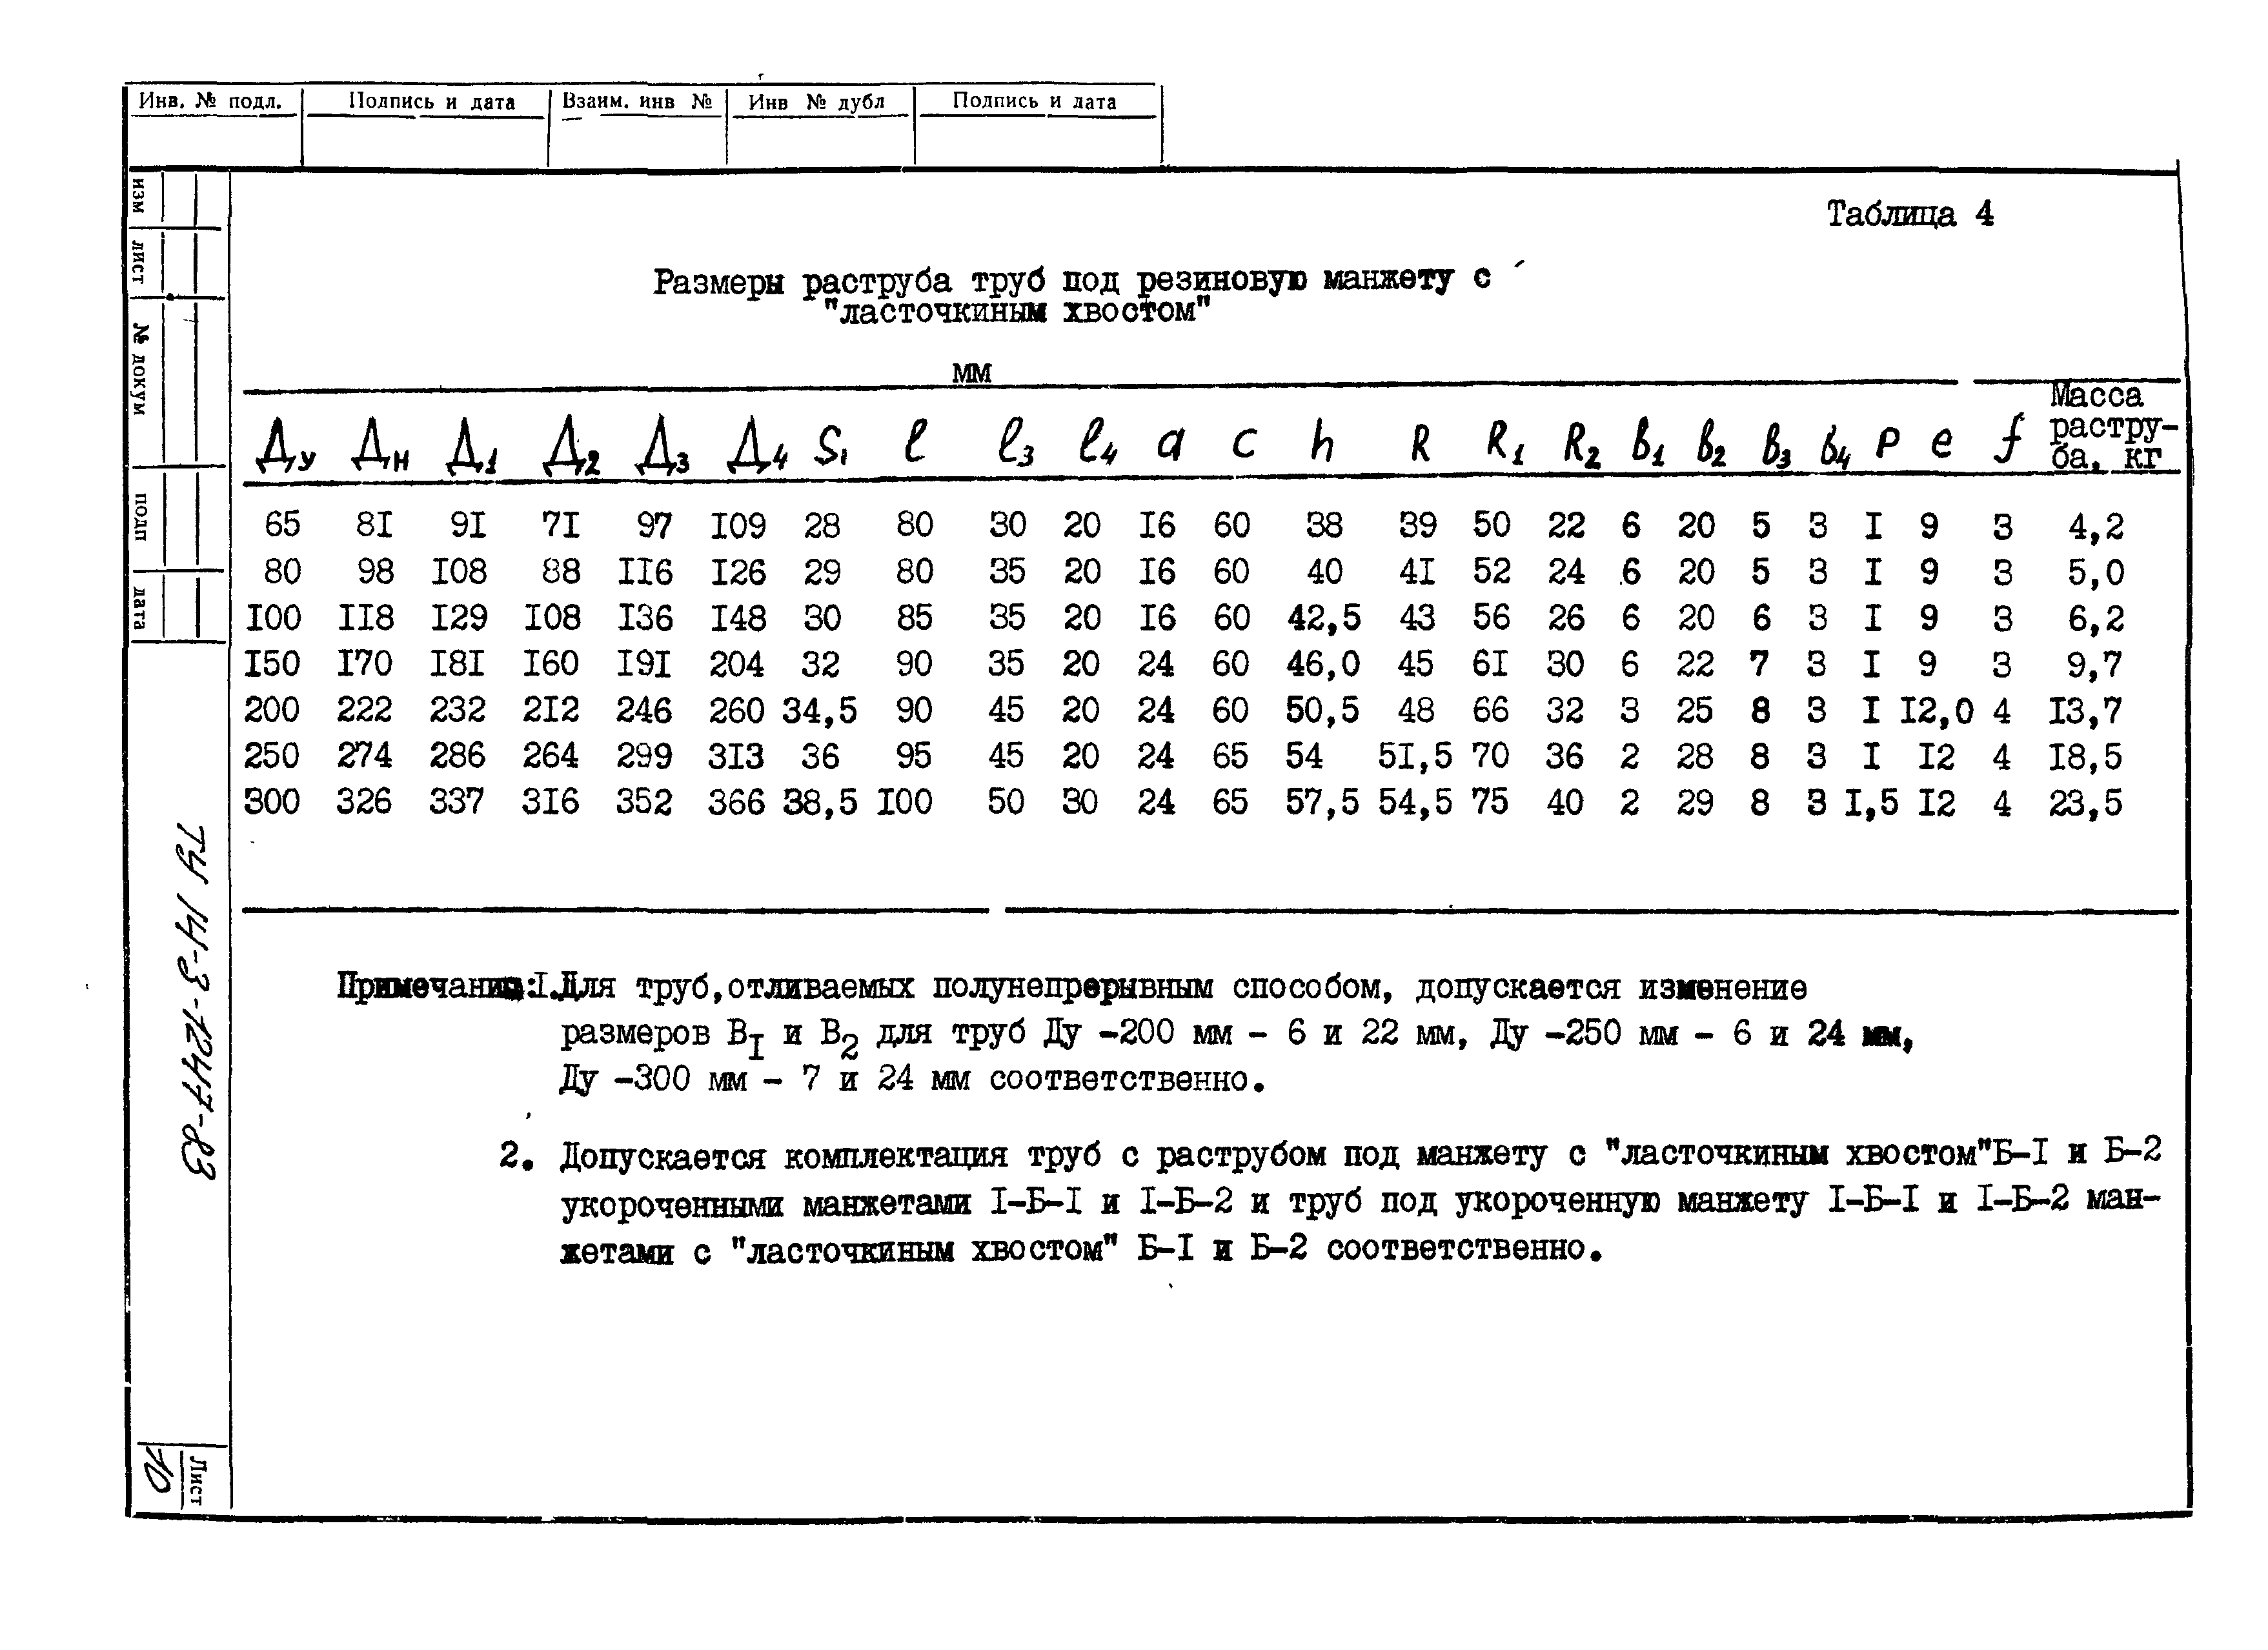 ТУ 14-3-1247-83